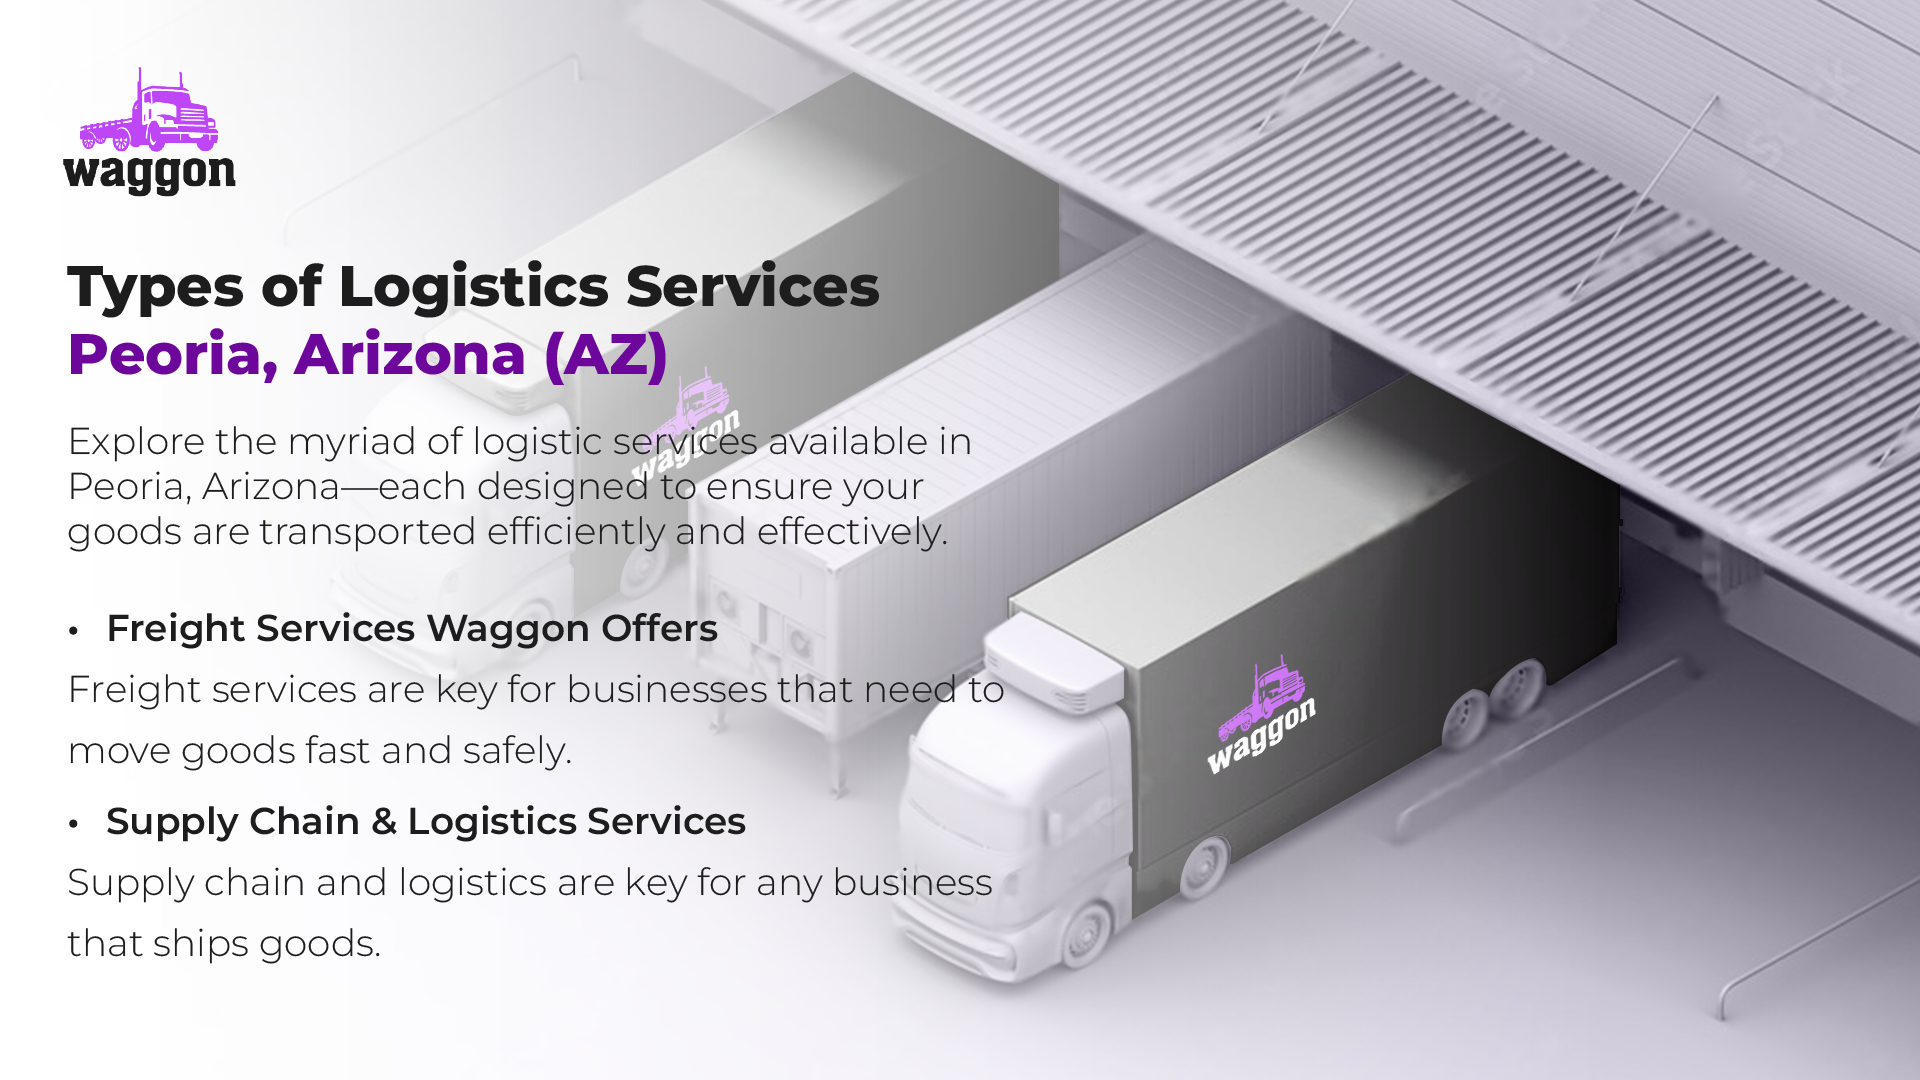 Types of Logistics Services in Peoria, Arizona (AZ)